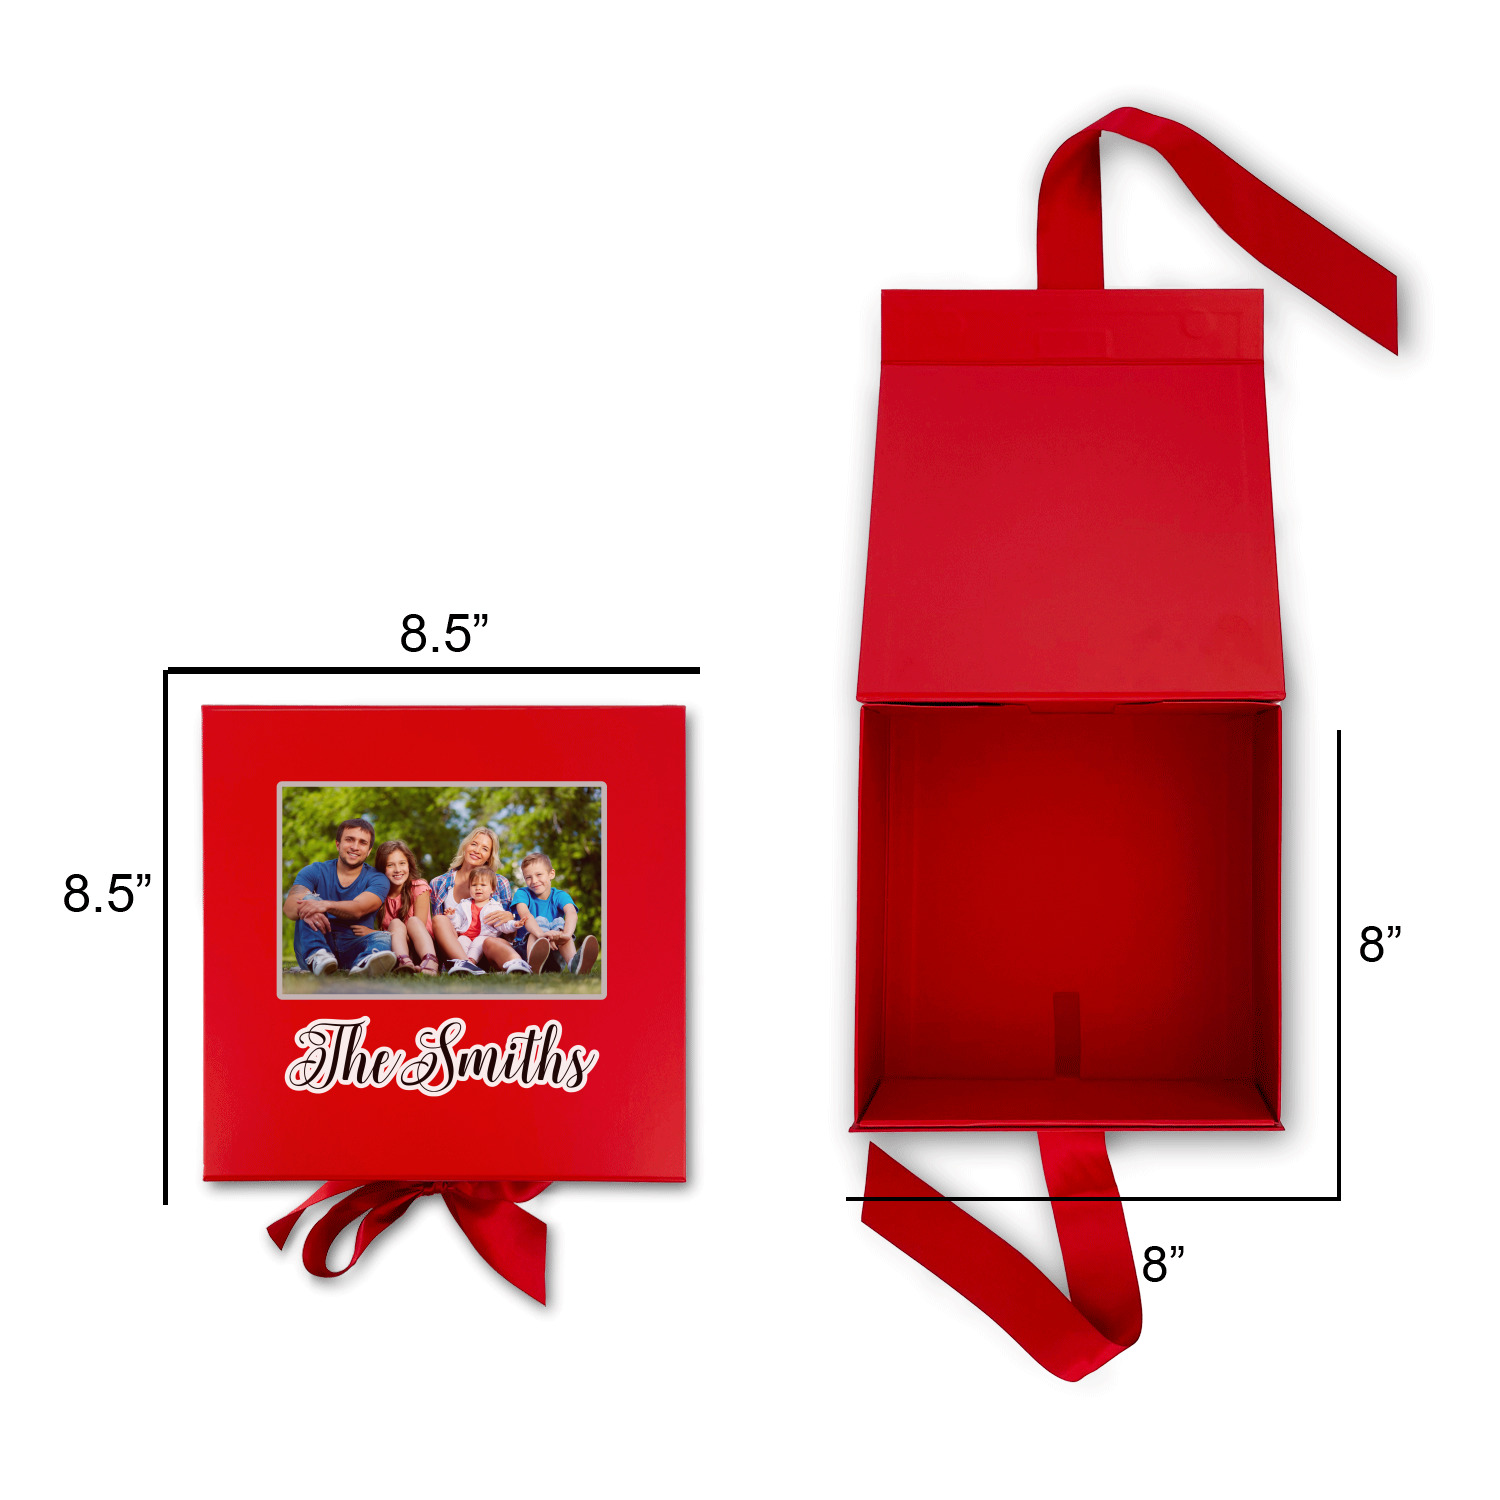 Custom Baby Girl Photo Gift Box with Magnetic Lid